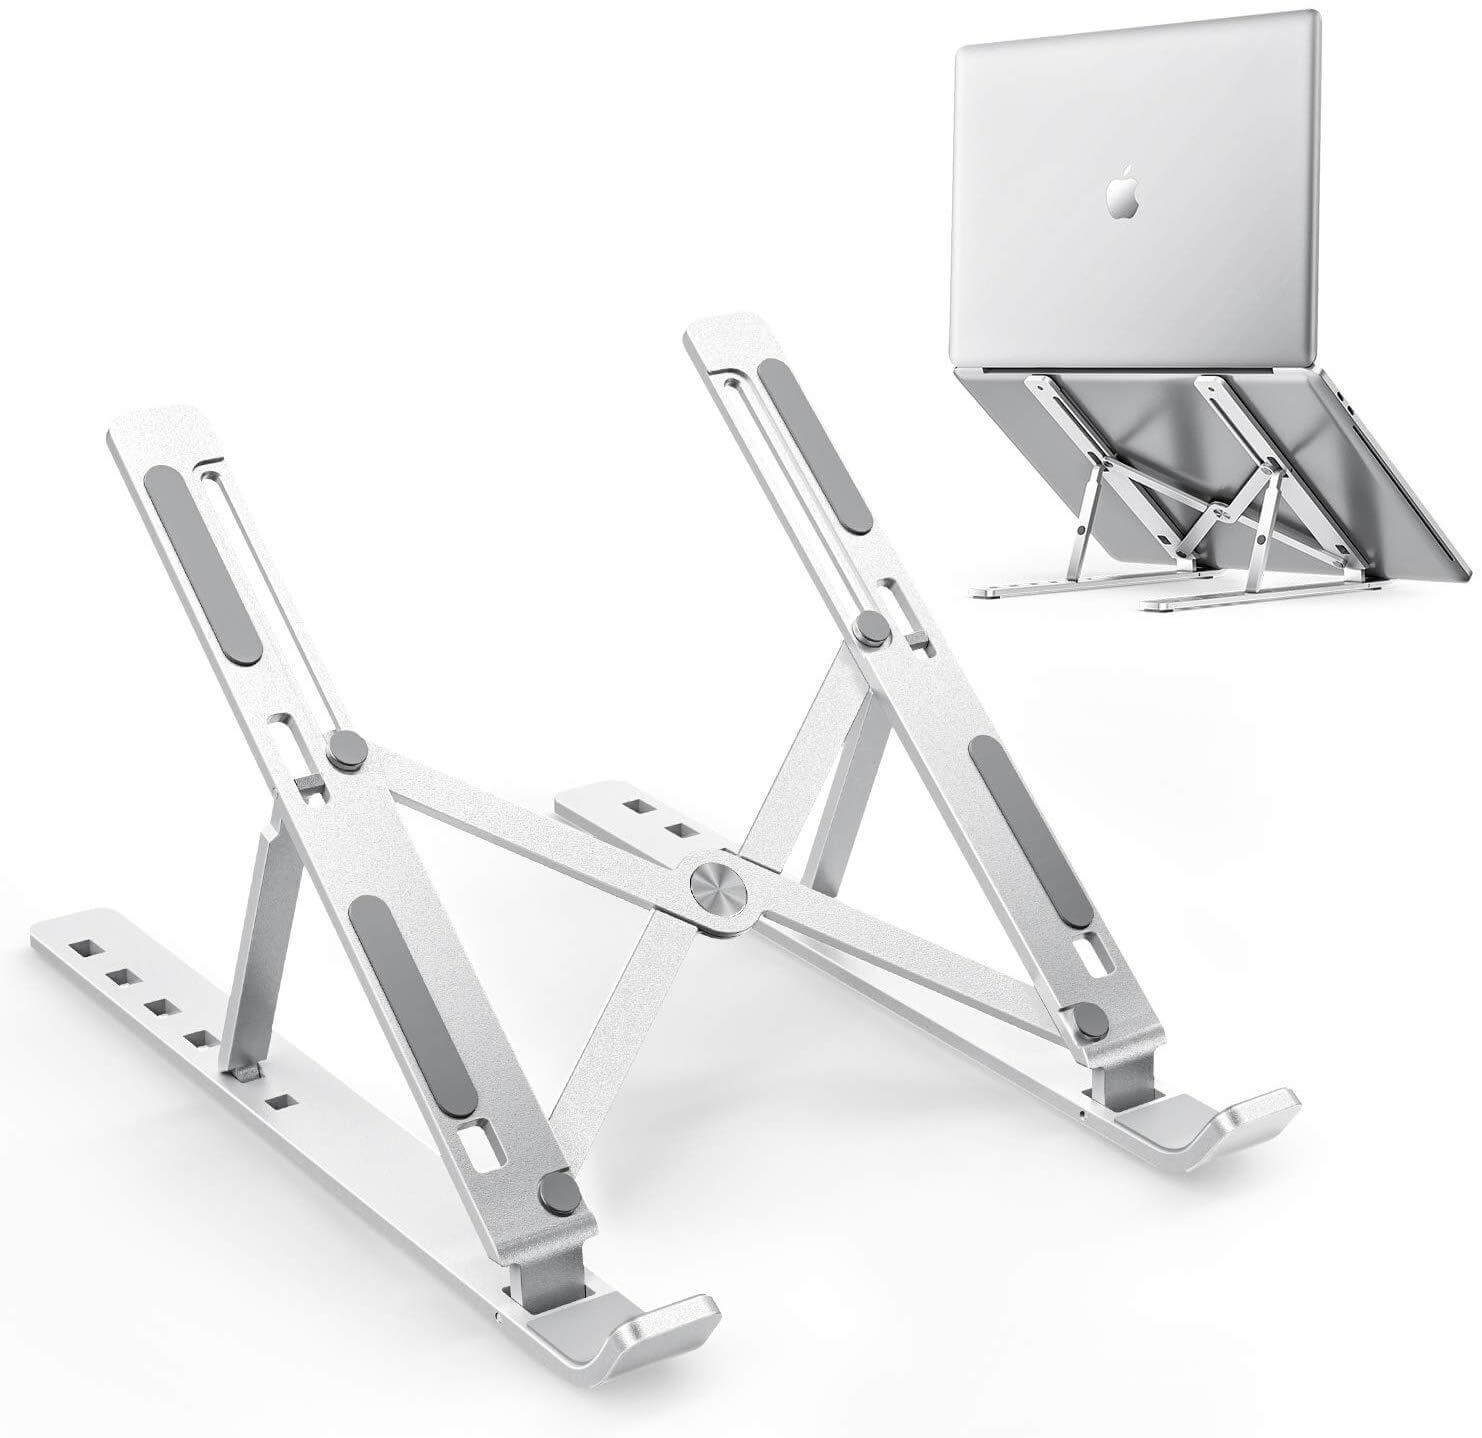 Clearance Sale-Adjustable & Portable Aluminum Laptop Stand